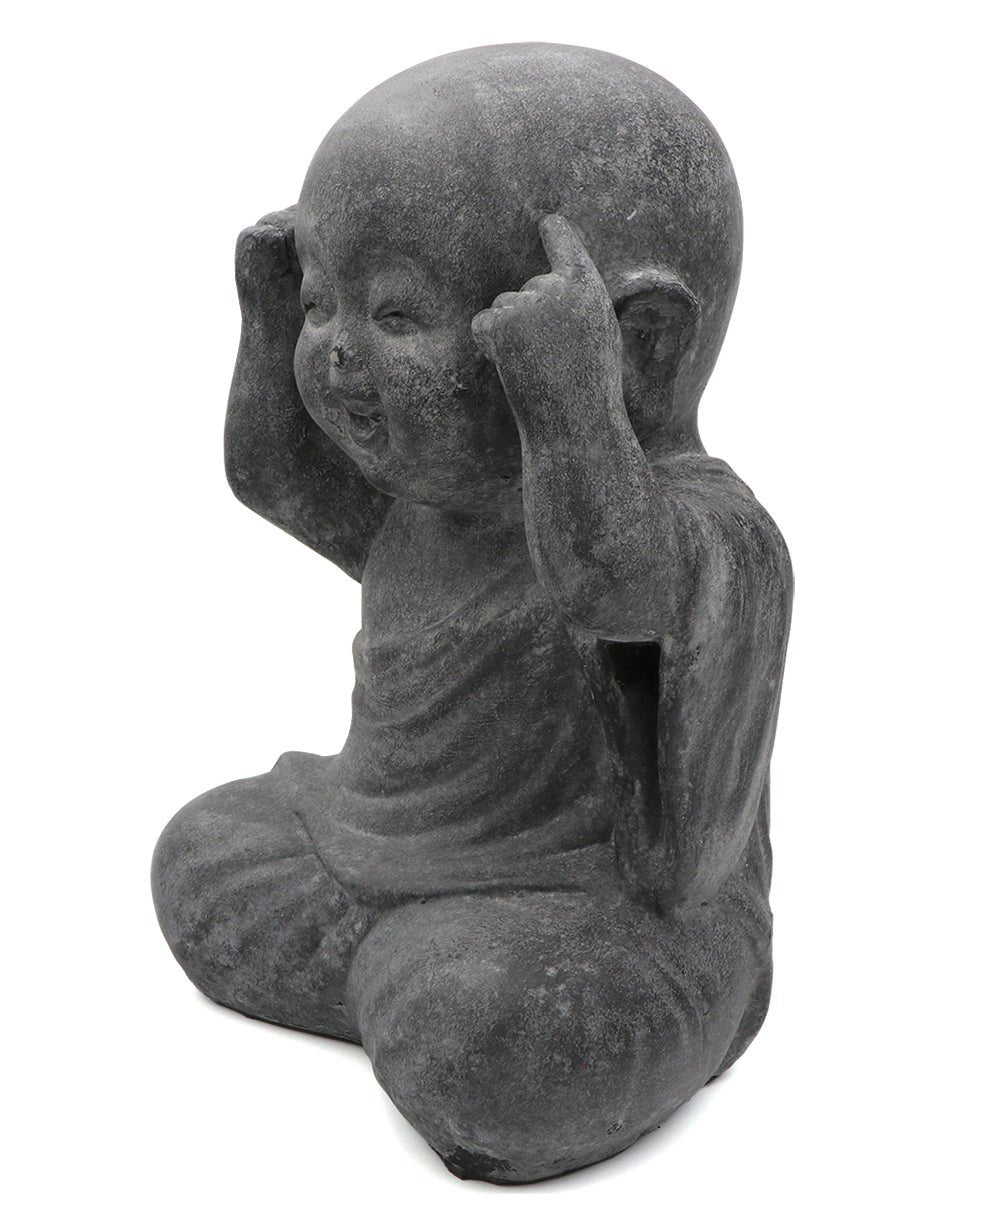 Enlightened Shaolin Monk Garden Statue, 16 Inches - Sculptures & Statues